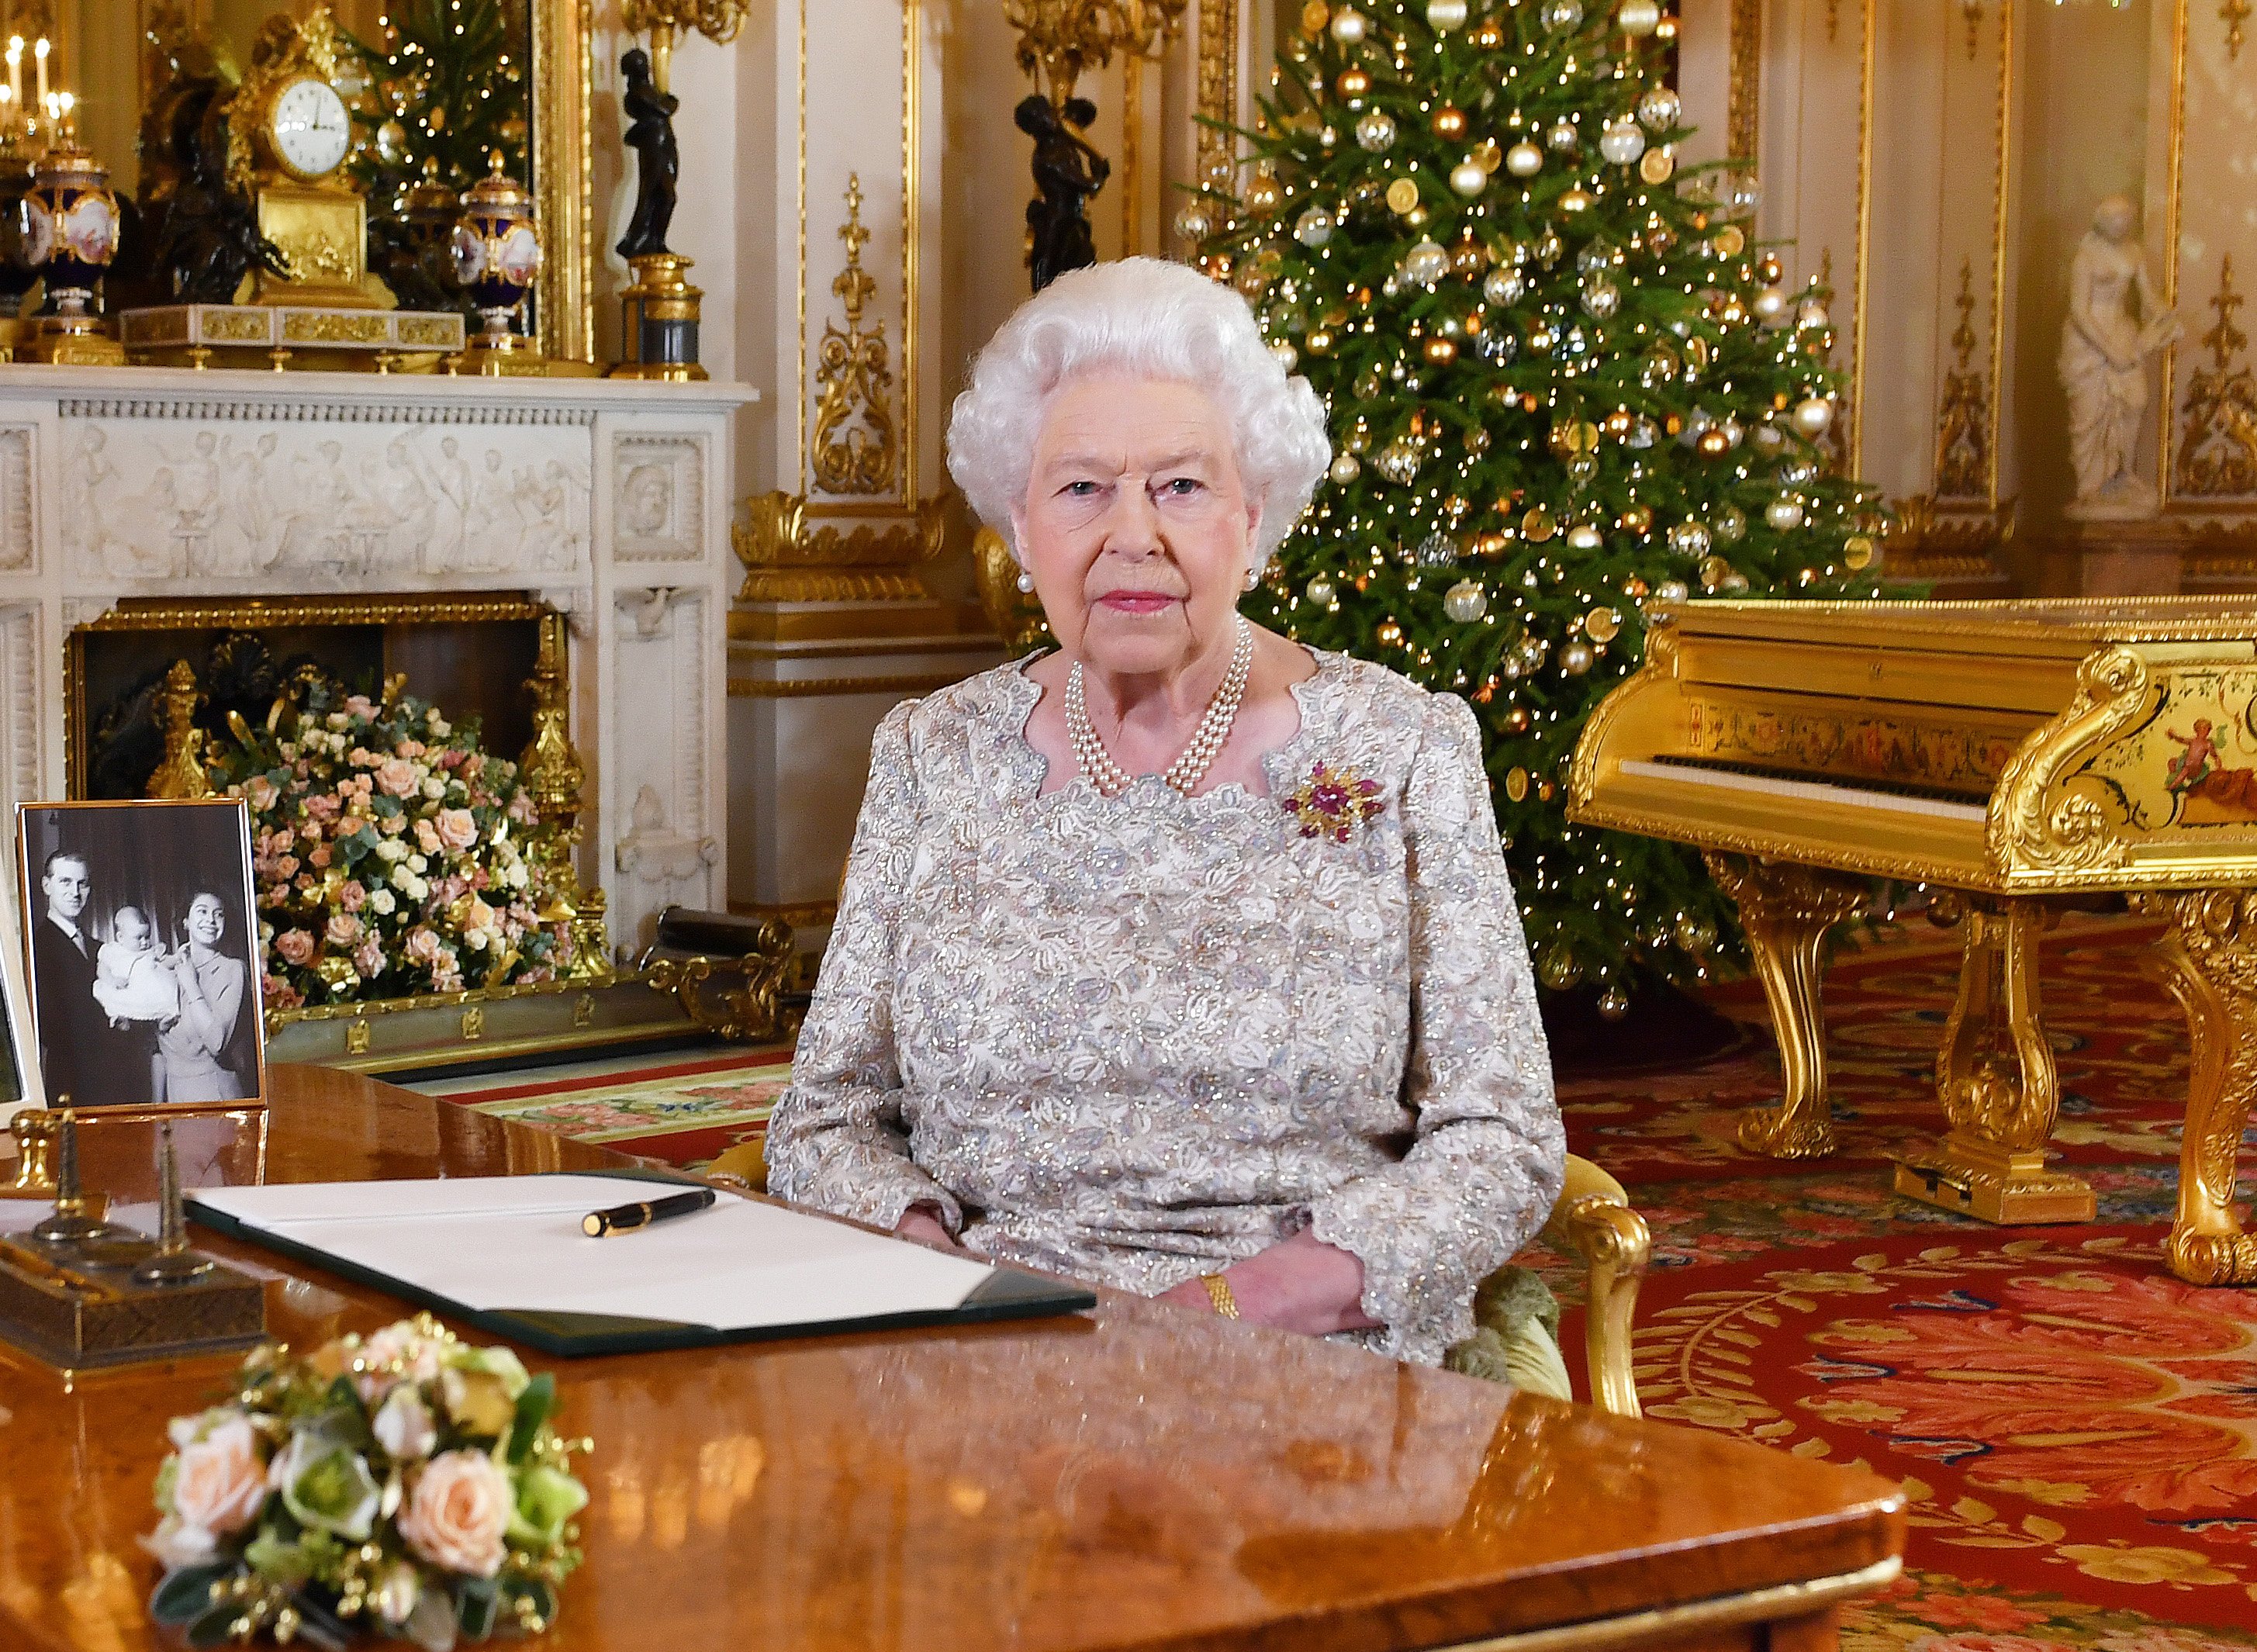 La Reina Isabel II cancela su tradicional almuerzo familiar prenavideño a causa de la pandemia